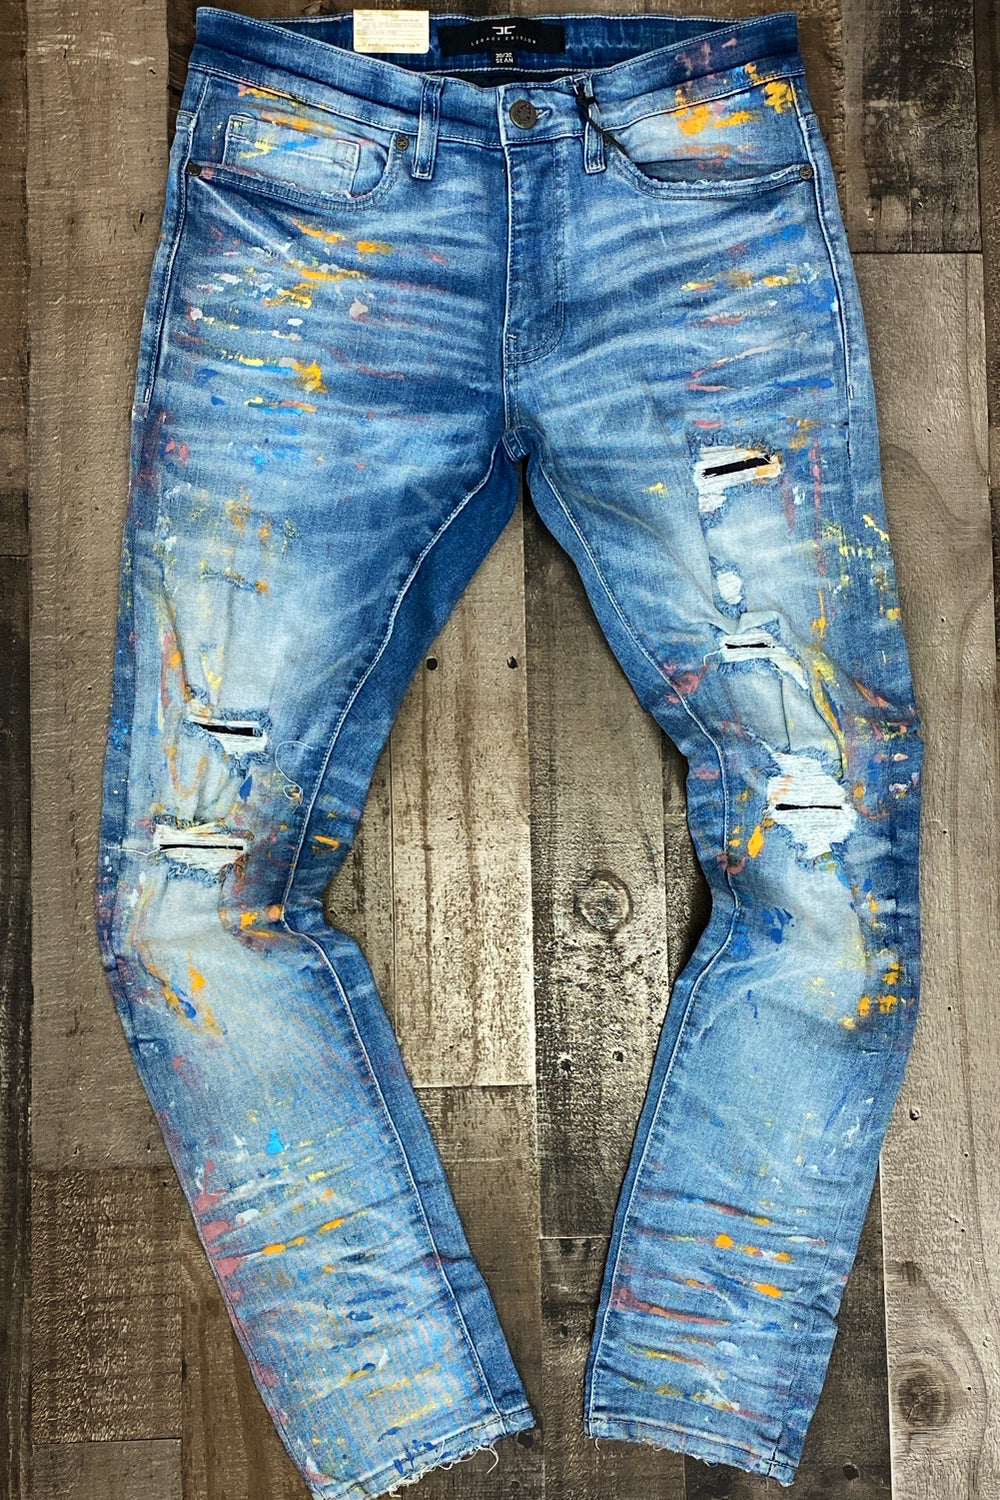 Jordan craig- paint splatter jeans (Sean)